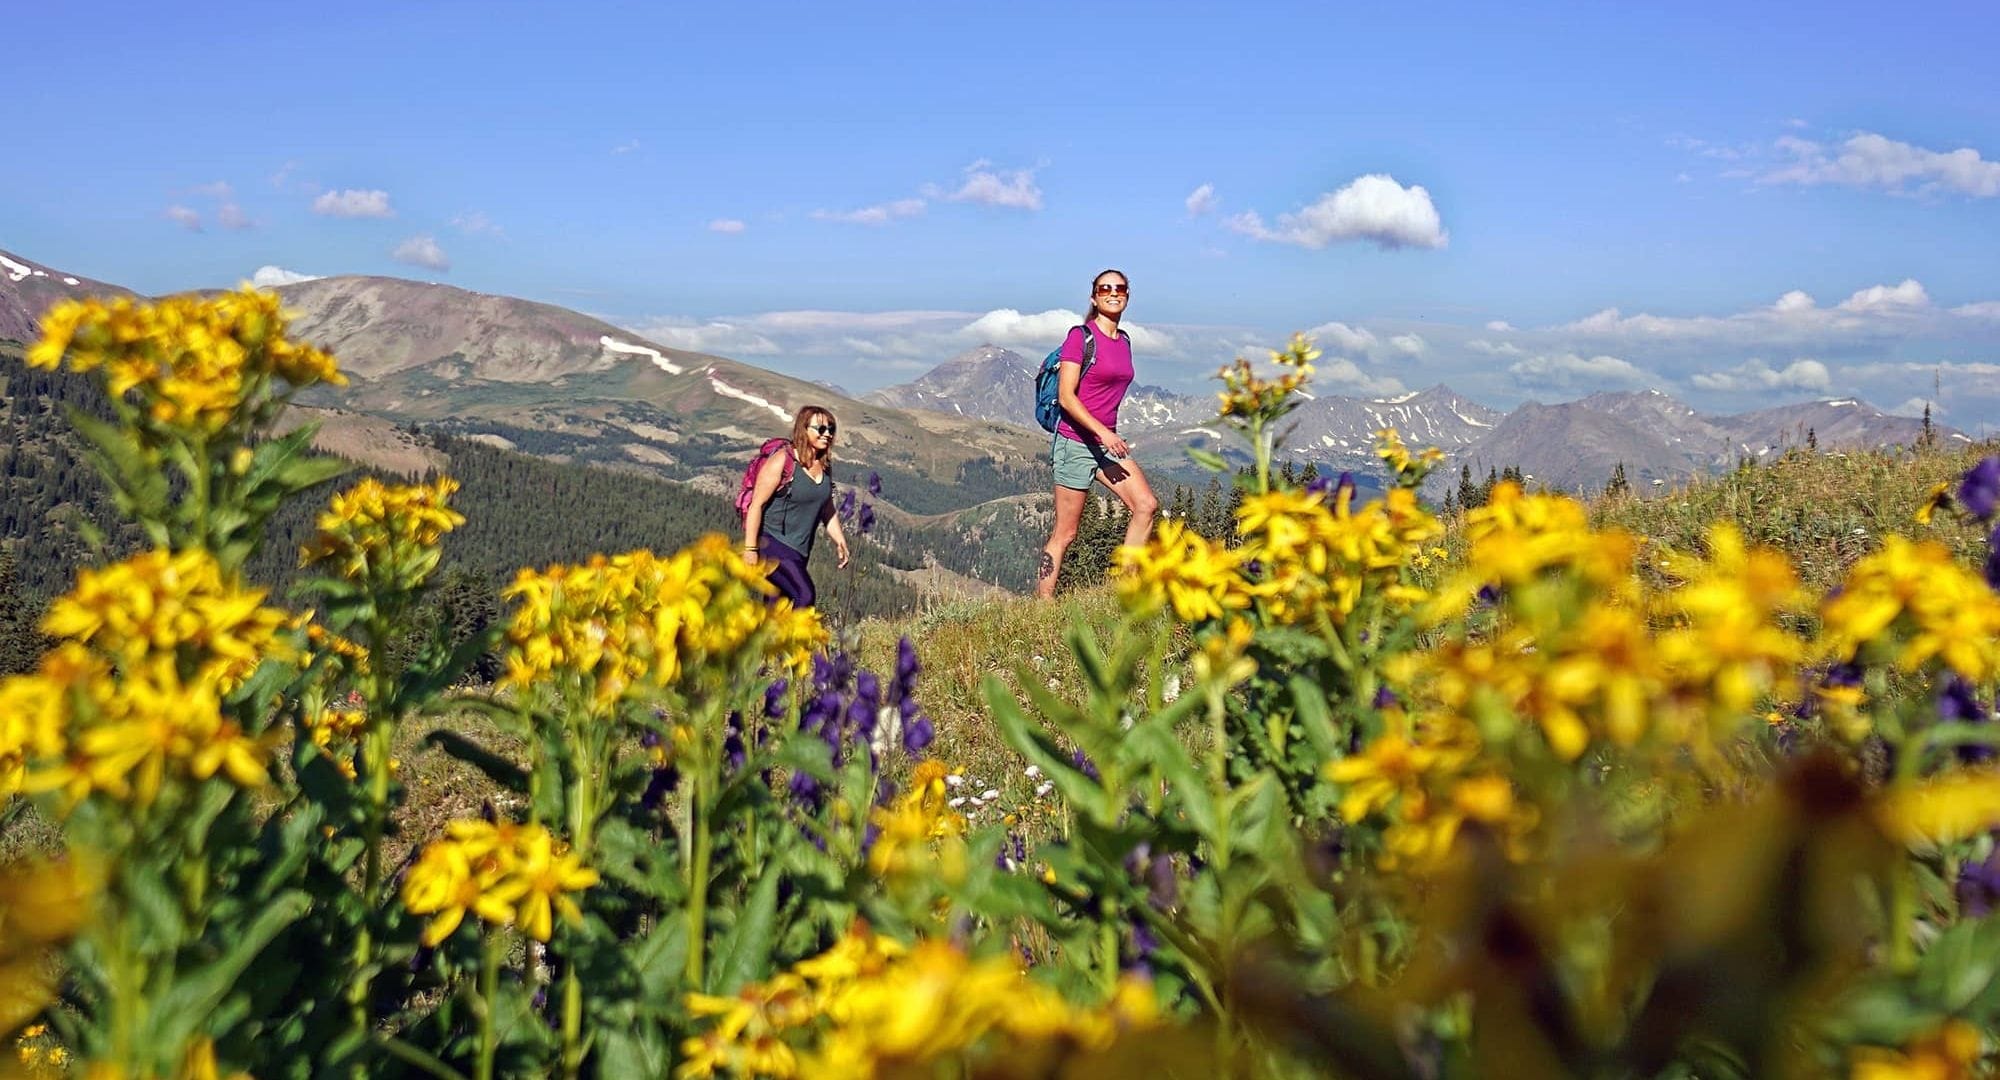 Two women hiking in Breckenridge wildflowers - photo by Louie Traub